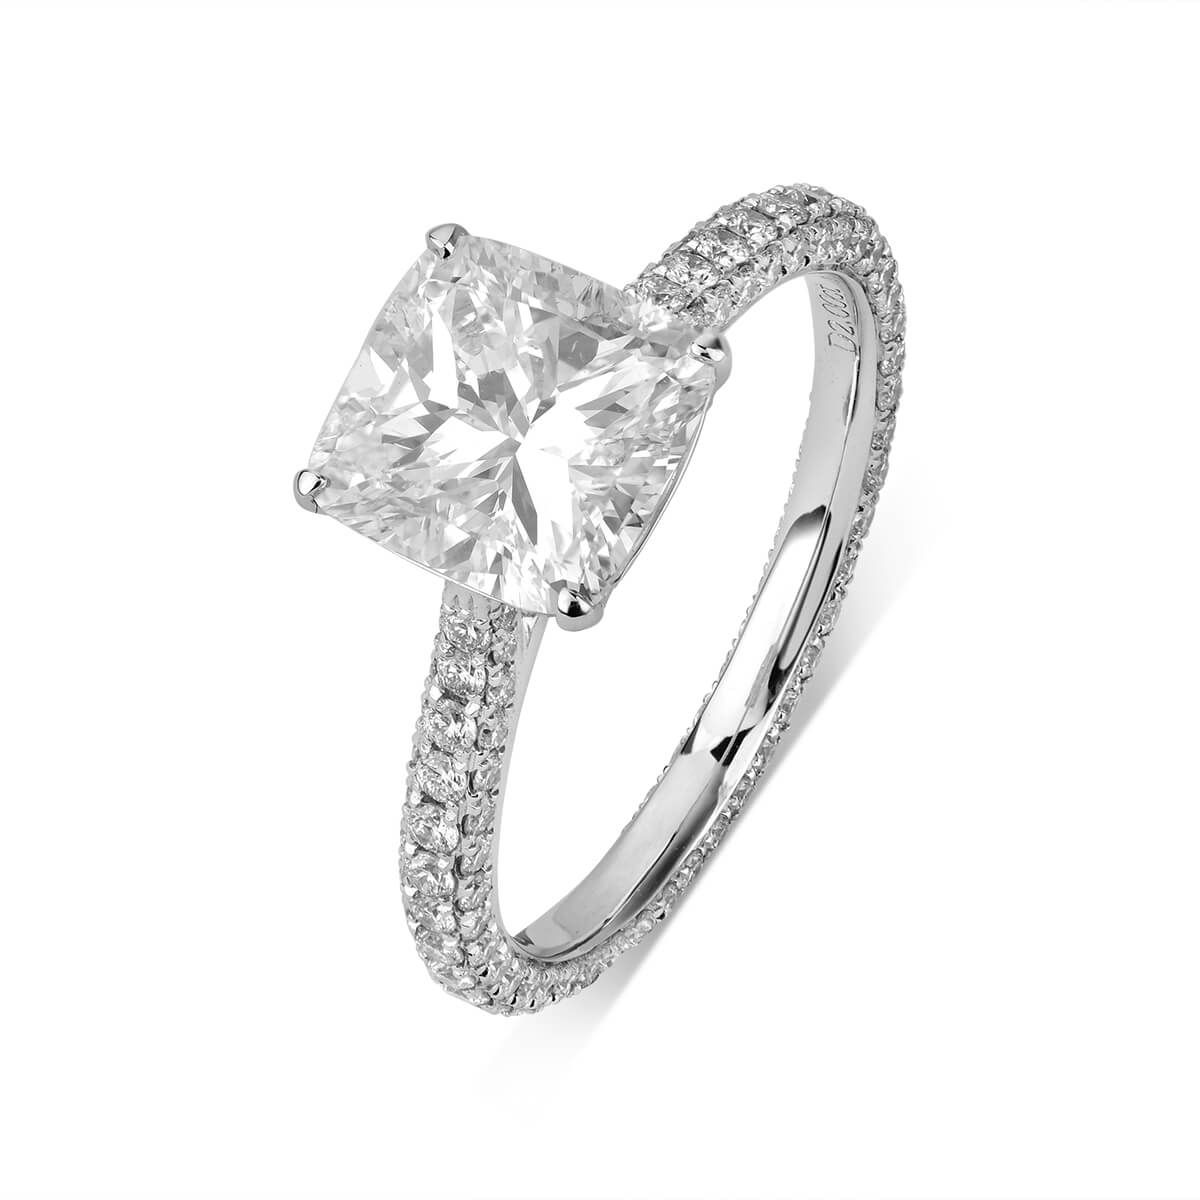  White Diamond Ring, 2.00 Ct. (2.95 Ct. TW), Cushion shape, GIA Certified, 7276707950